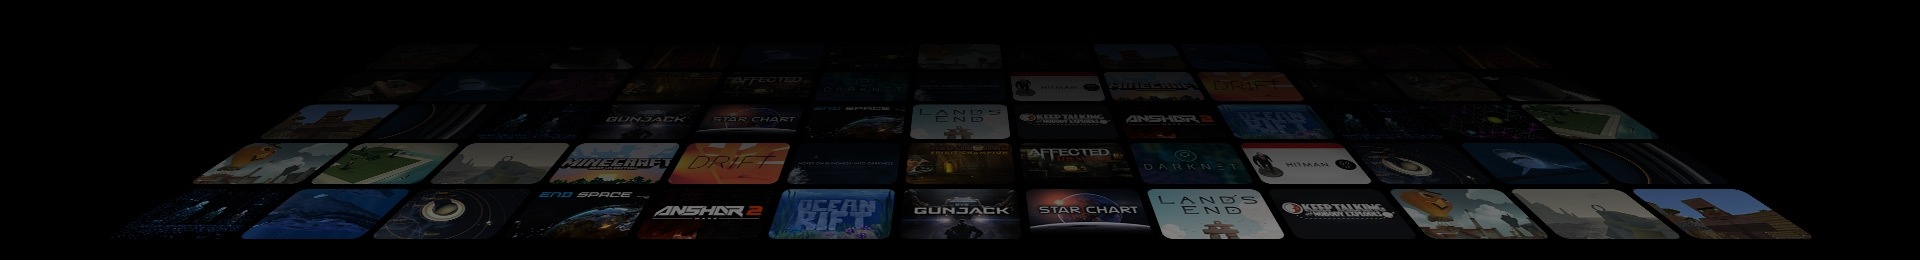 Rows of Gear VR app thumbnails